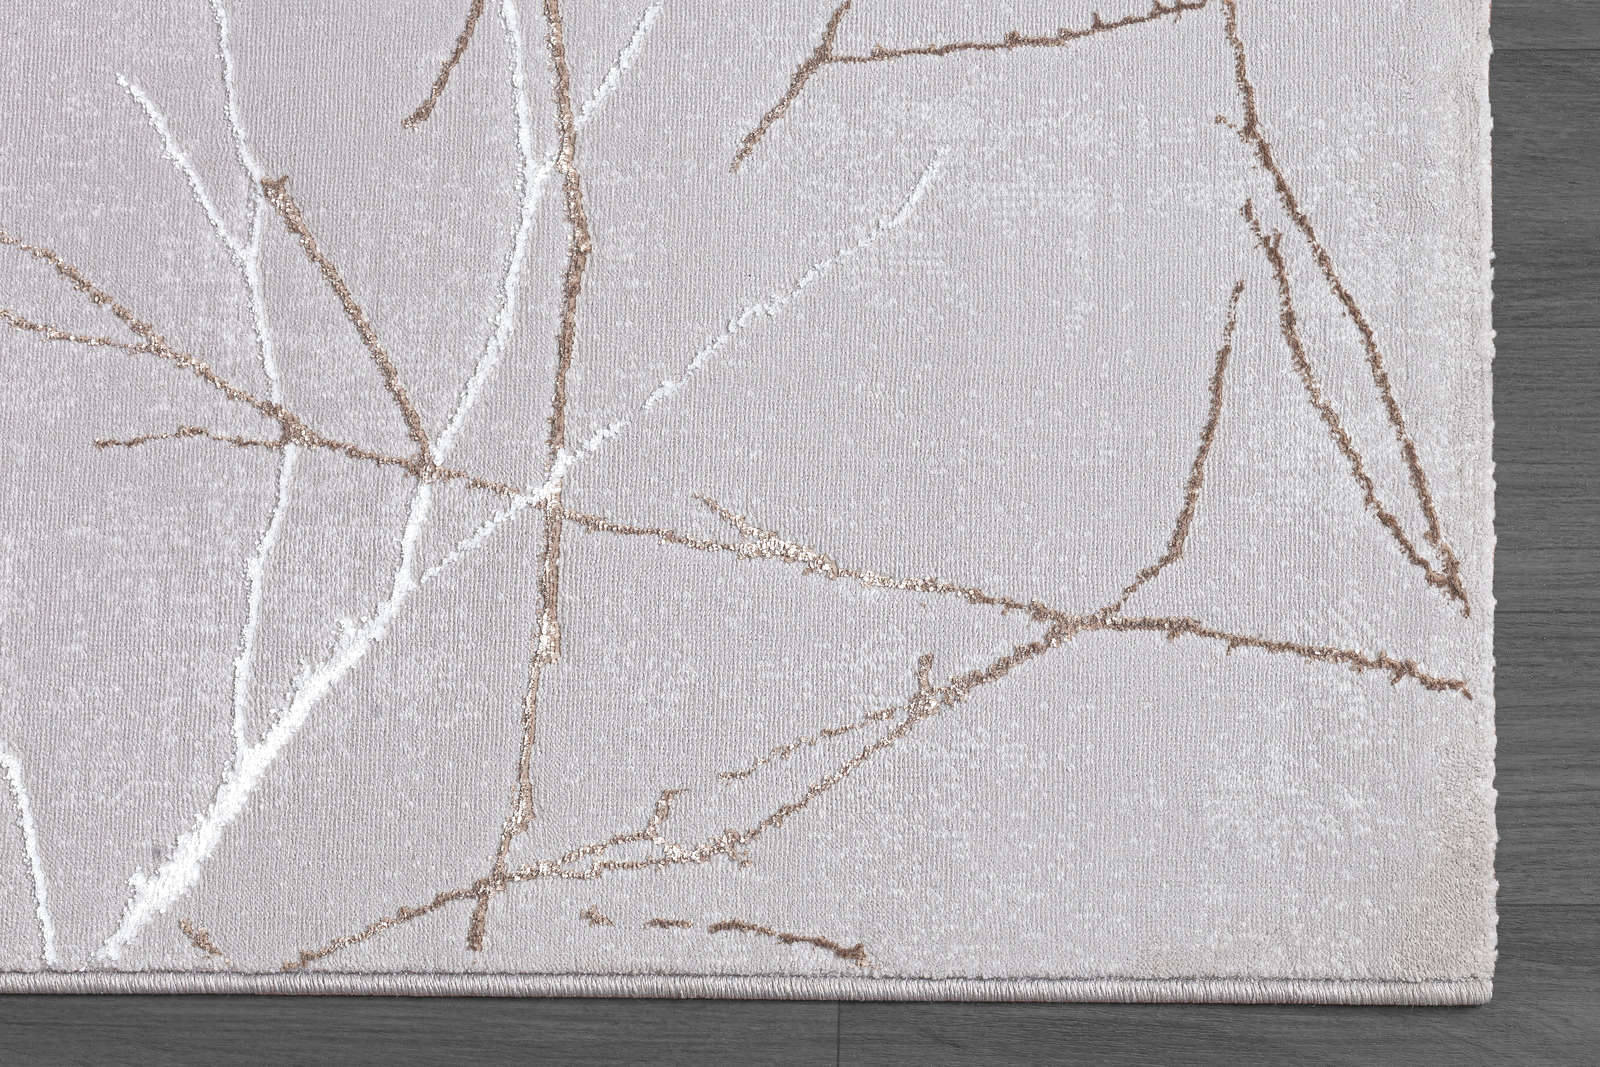             Bemusterter Hochflor Teppich in Grau – 230 x 160 cm
        